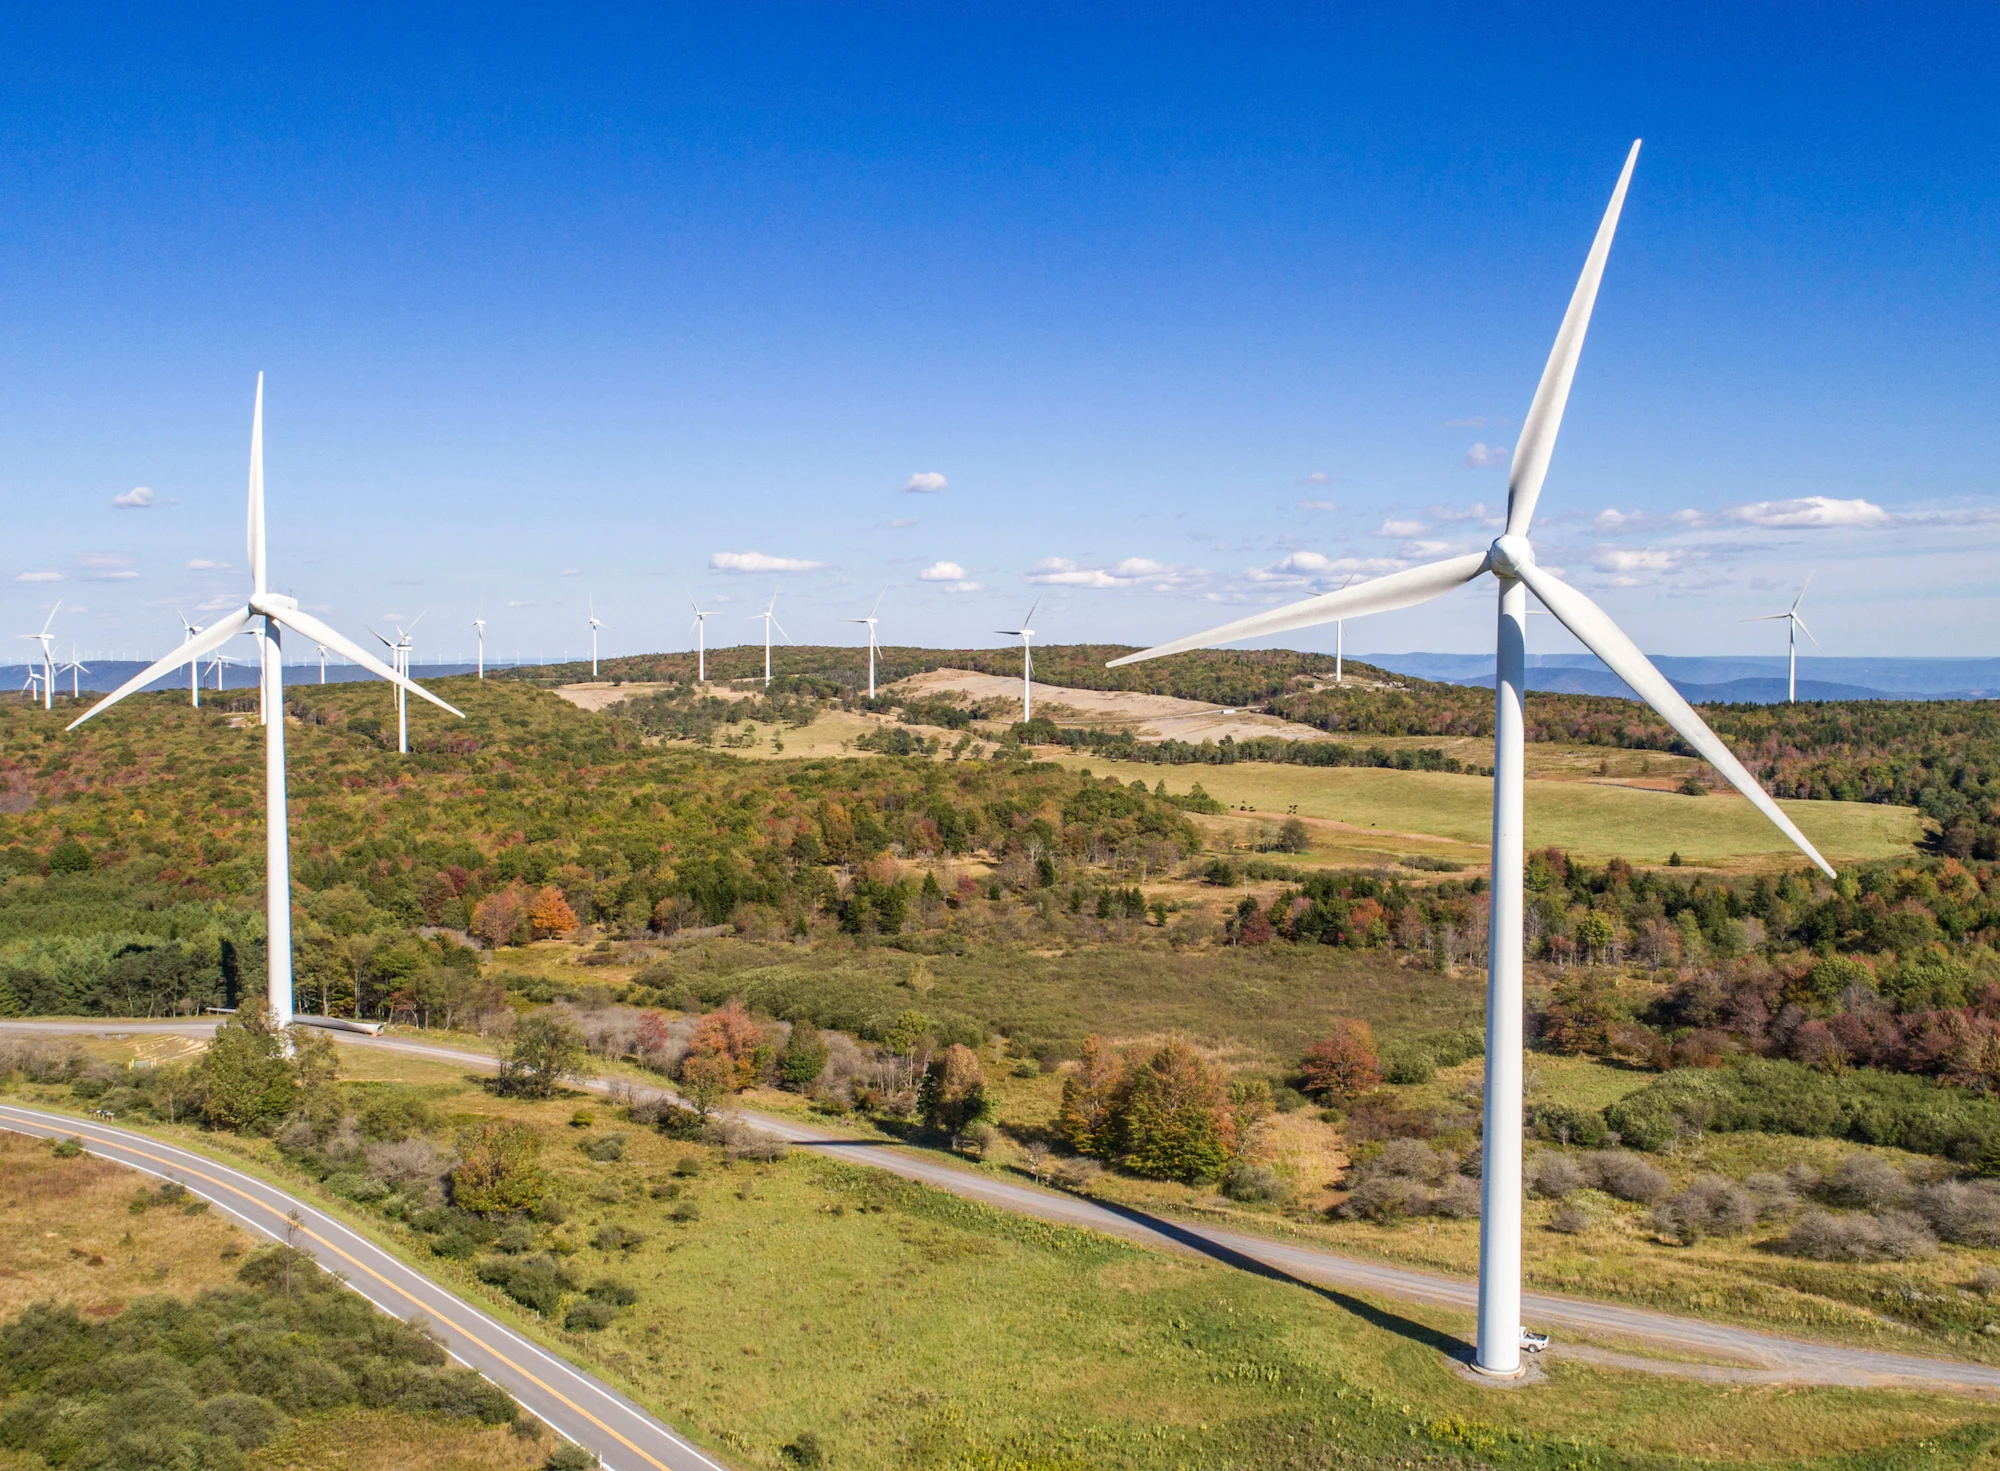 Several Wind turbines on a wind farm